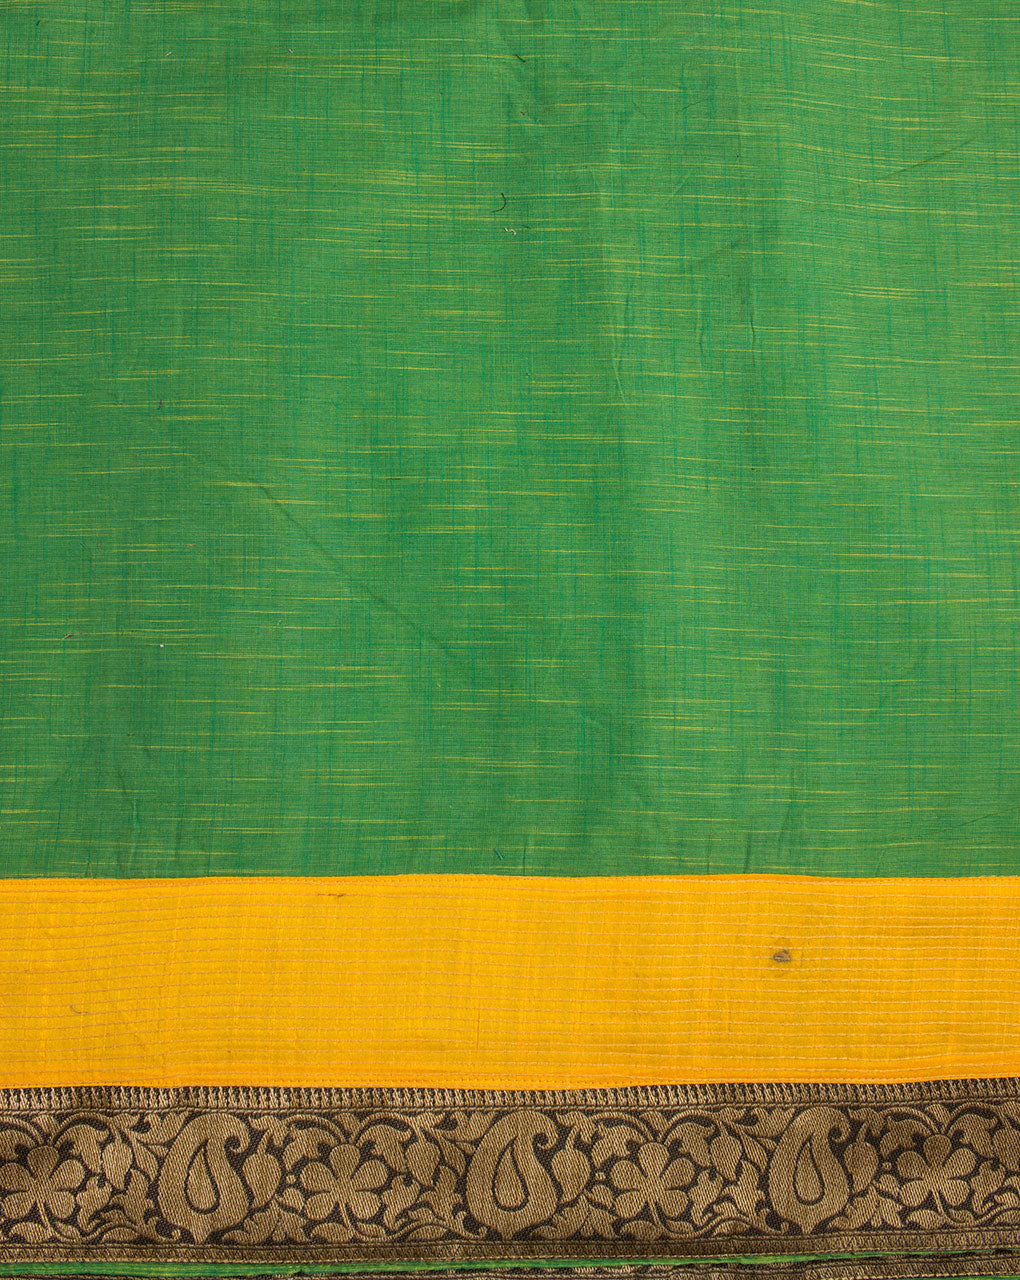 Green Plain Woven Loom Textured Cotton Fabric - Fabriclore.com